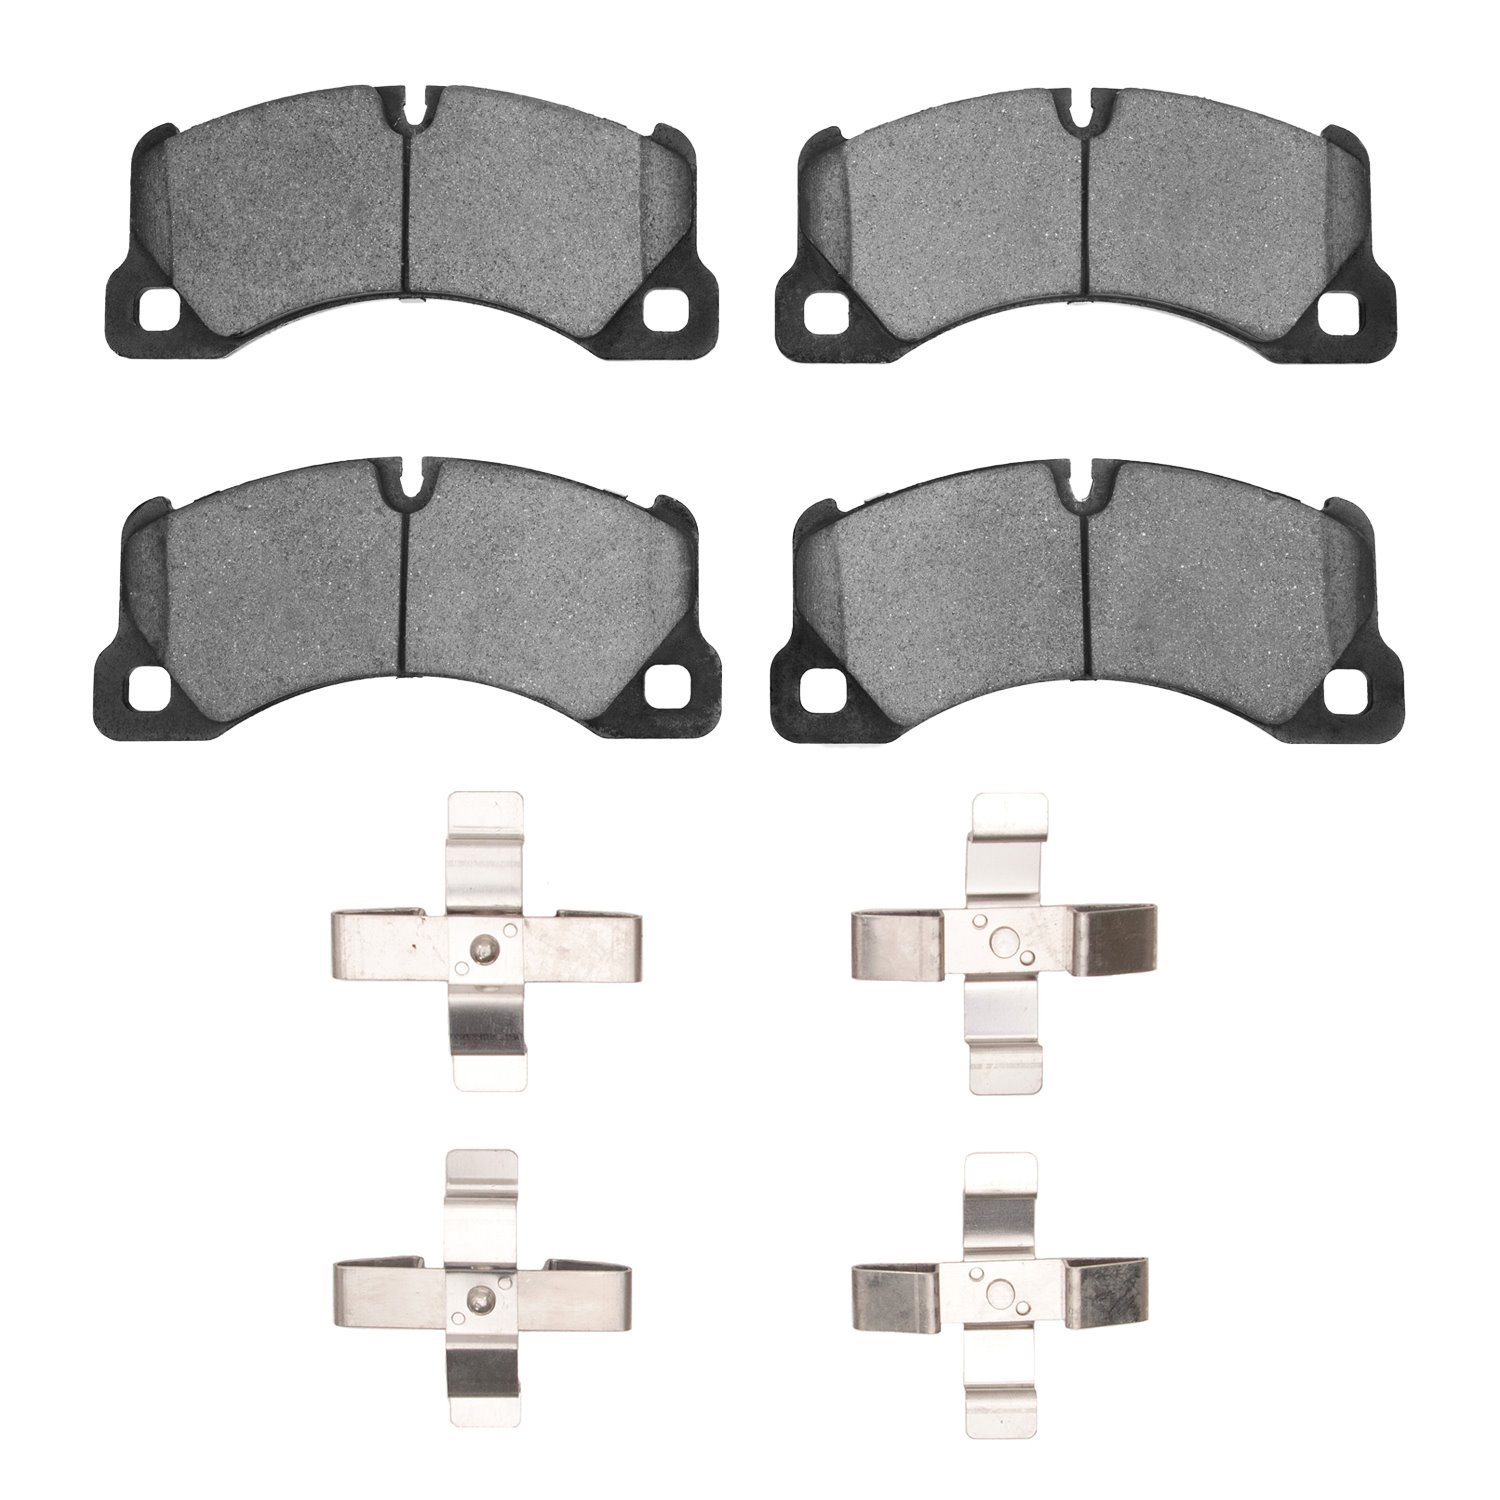 1551-1349-01 5000 Advanced Low-Metallic Brake Pads & Hardware Kit, 2009-2019 Porsche, Position: Front